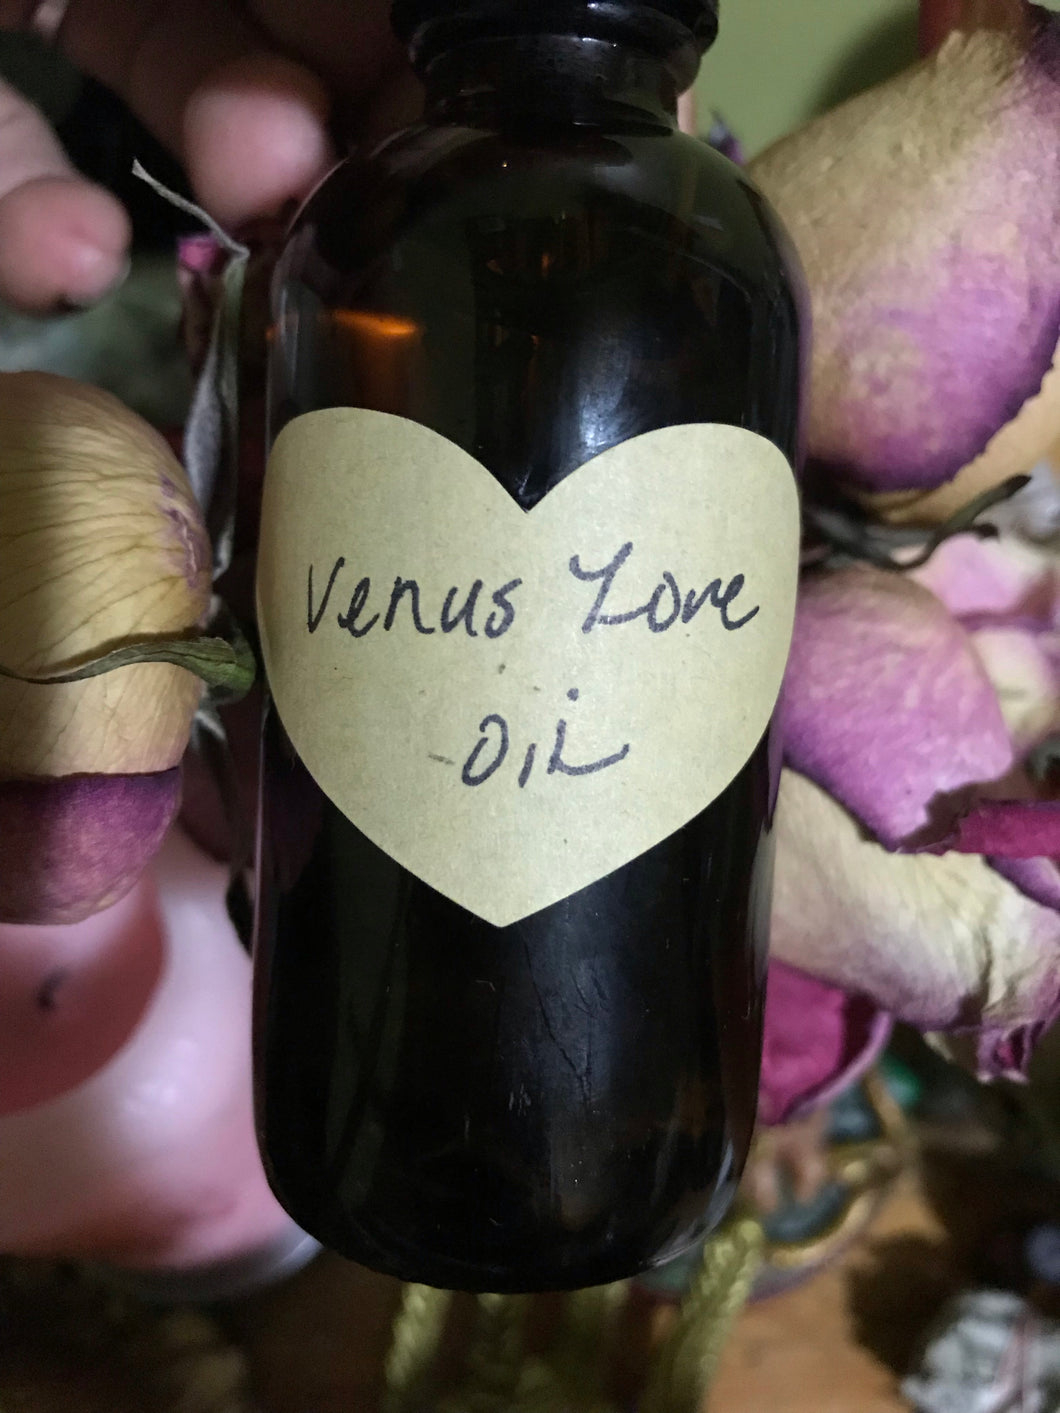 Venus Love Oil